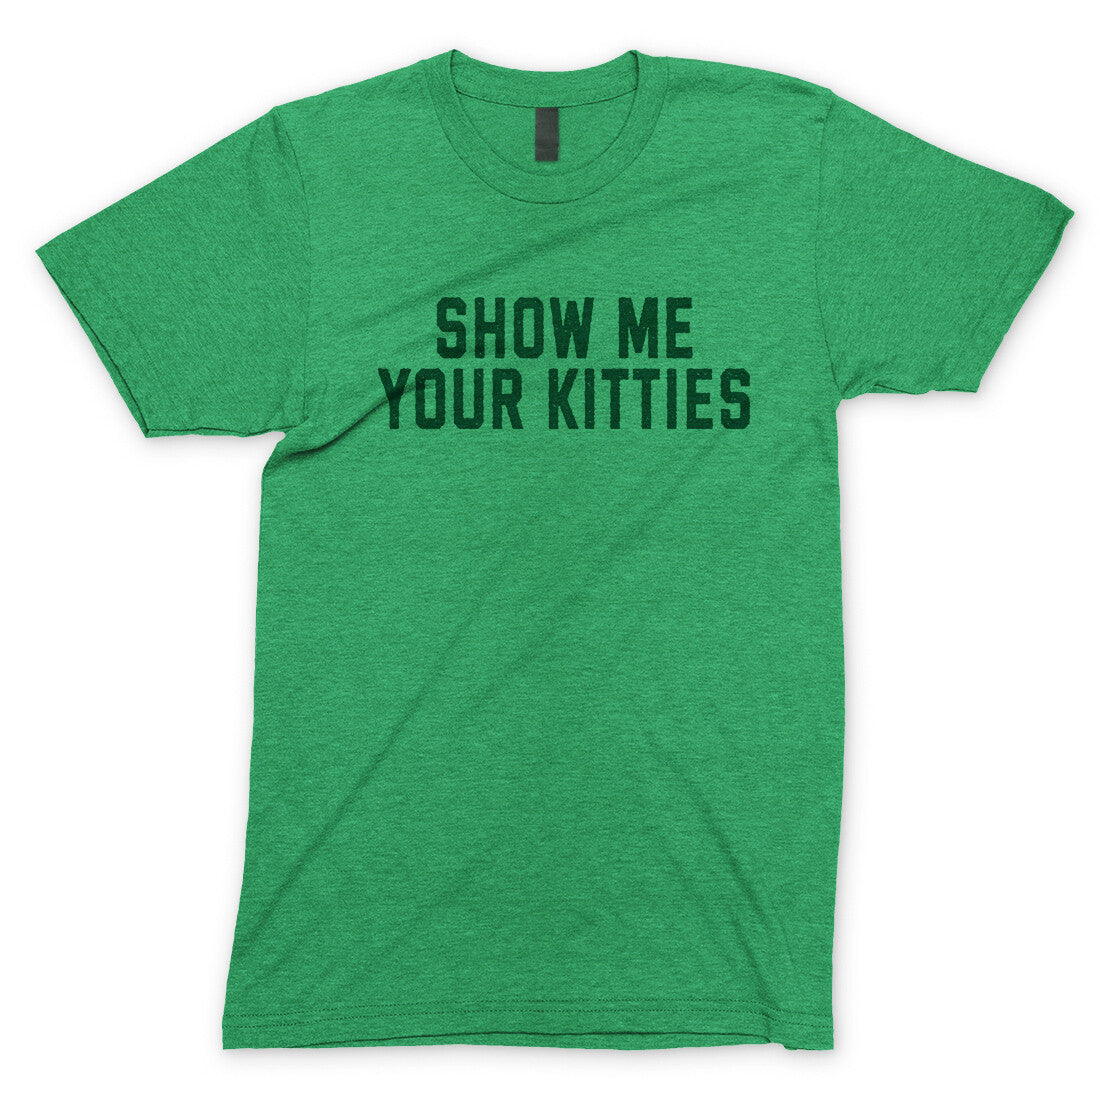 Show me Your Kitties in Heather Irish Green Color